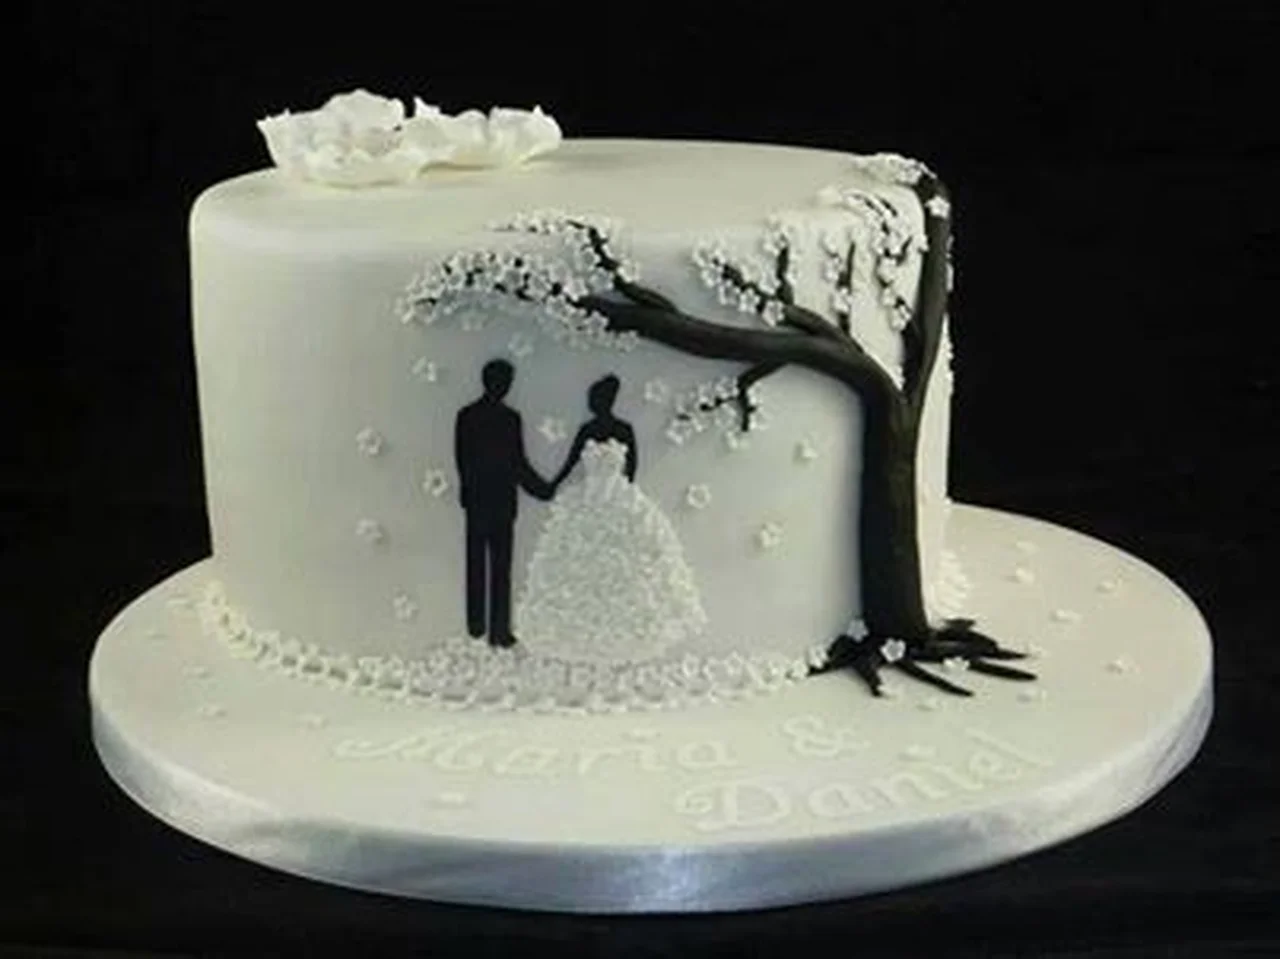 Tort ślubny